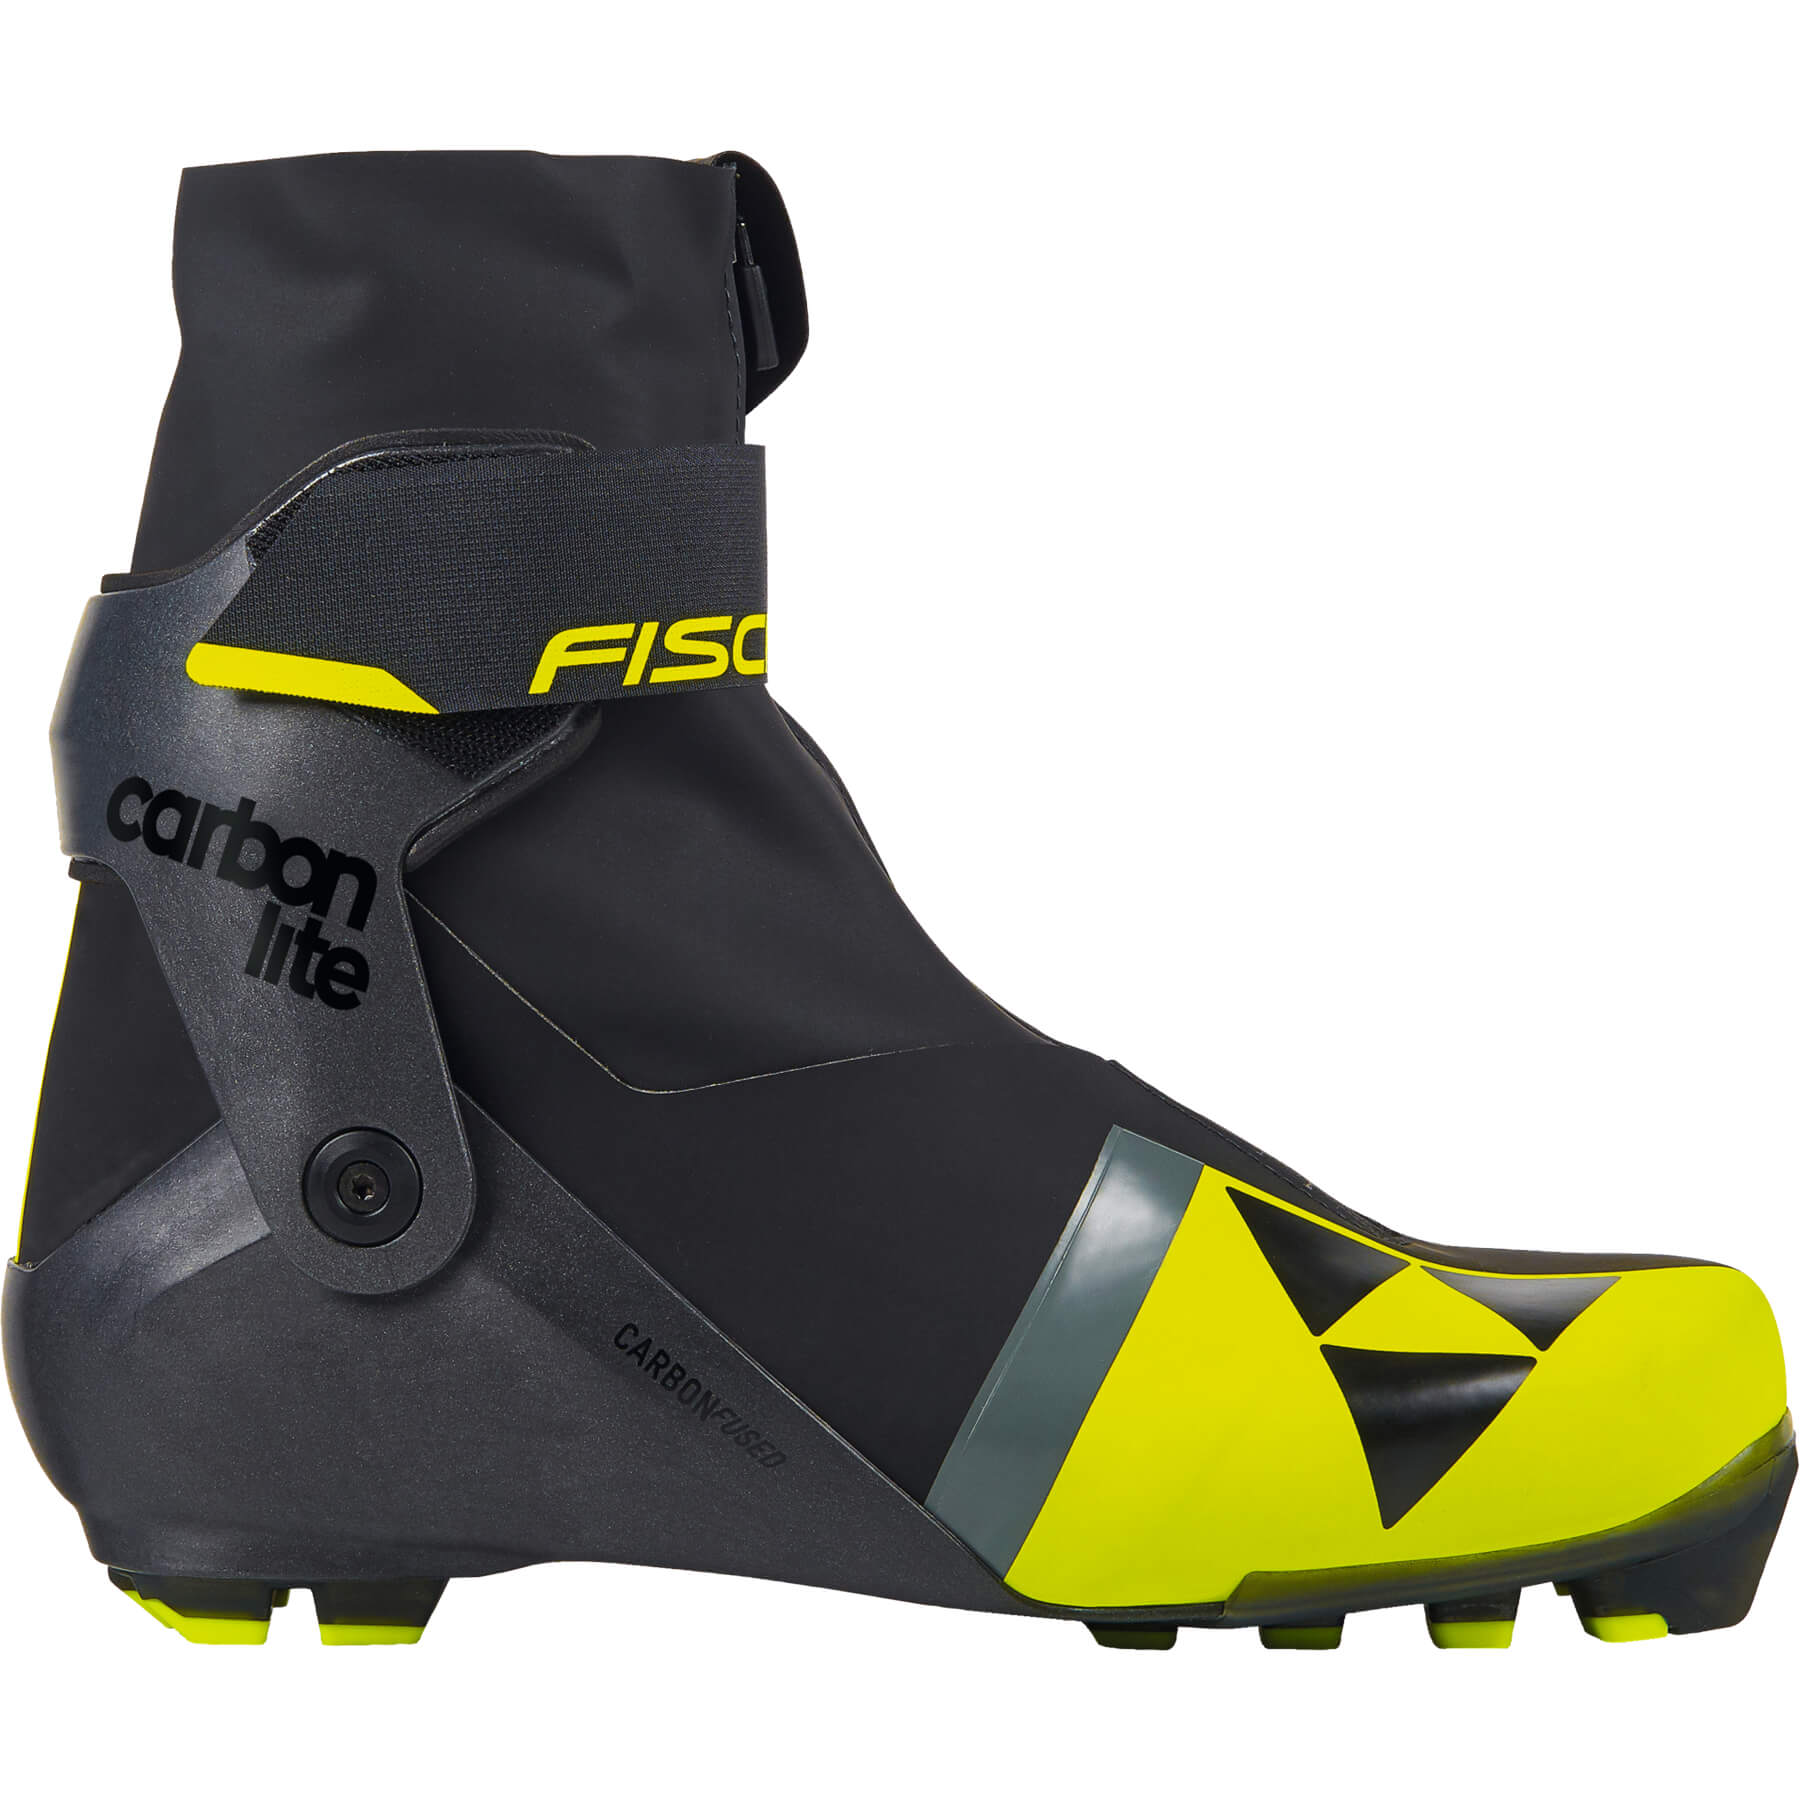 Fischer Carbonlite Skate Boot